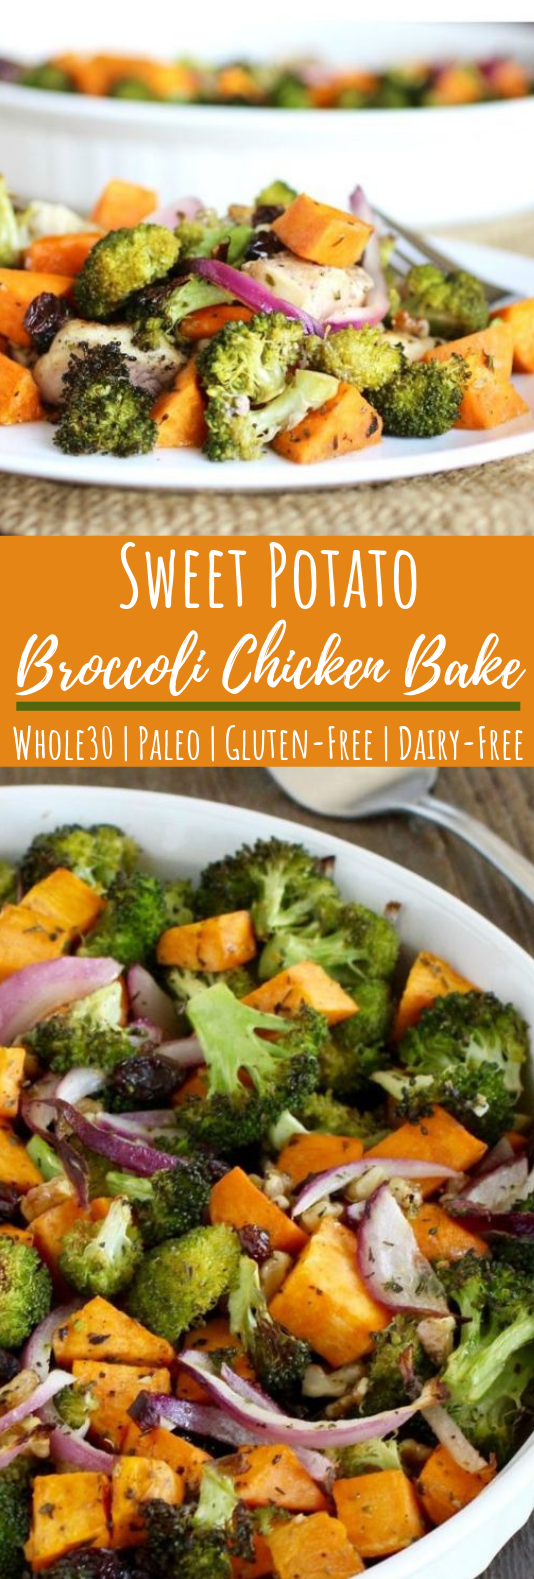 Sweet Potato Broccoli Chicken Bake #paleo #glutenfree